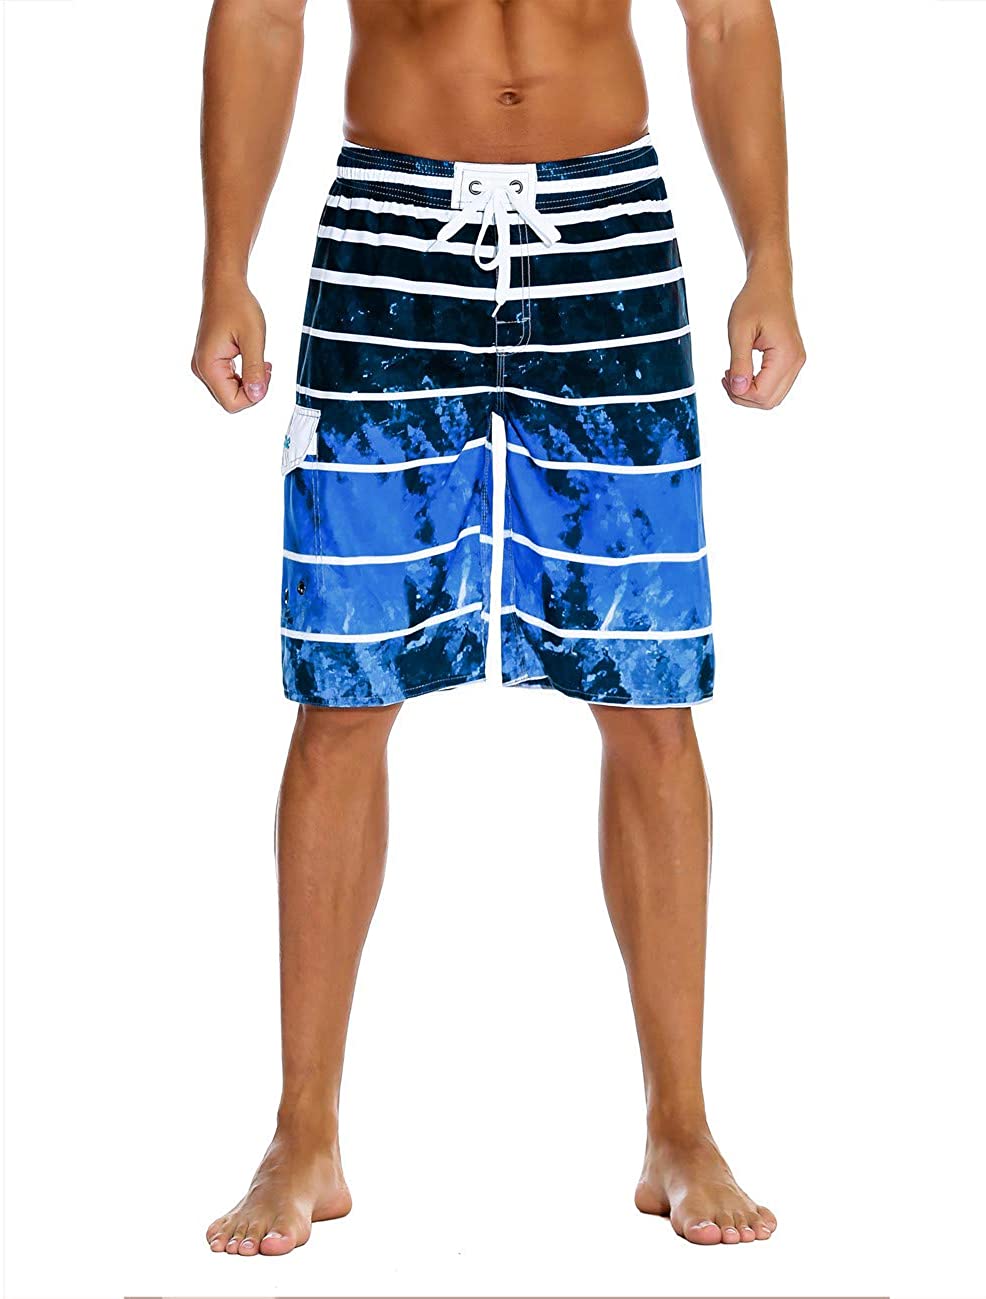 Unitop Men's Swim Trunks Colortful Striped Beach Board Shorts, Blue-1 ...